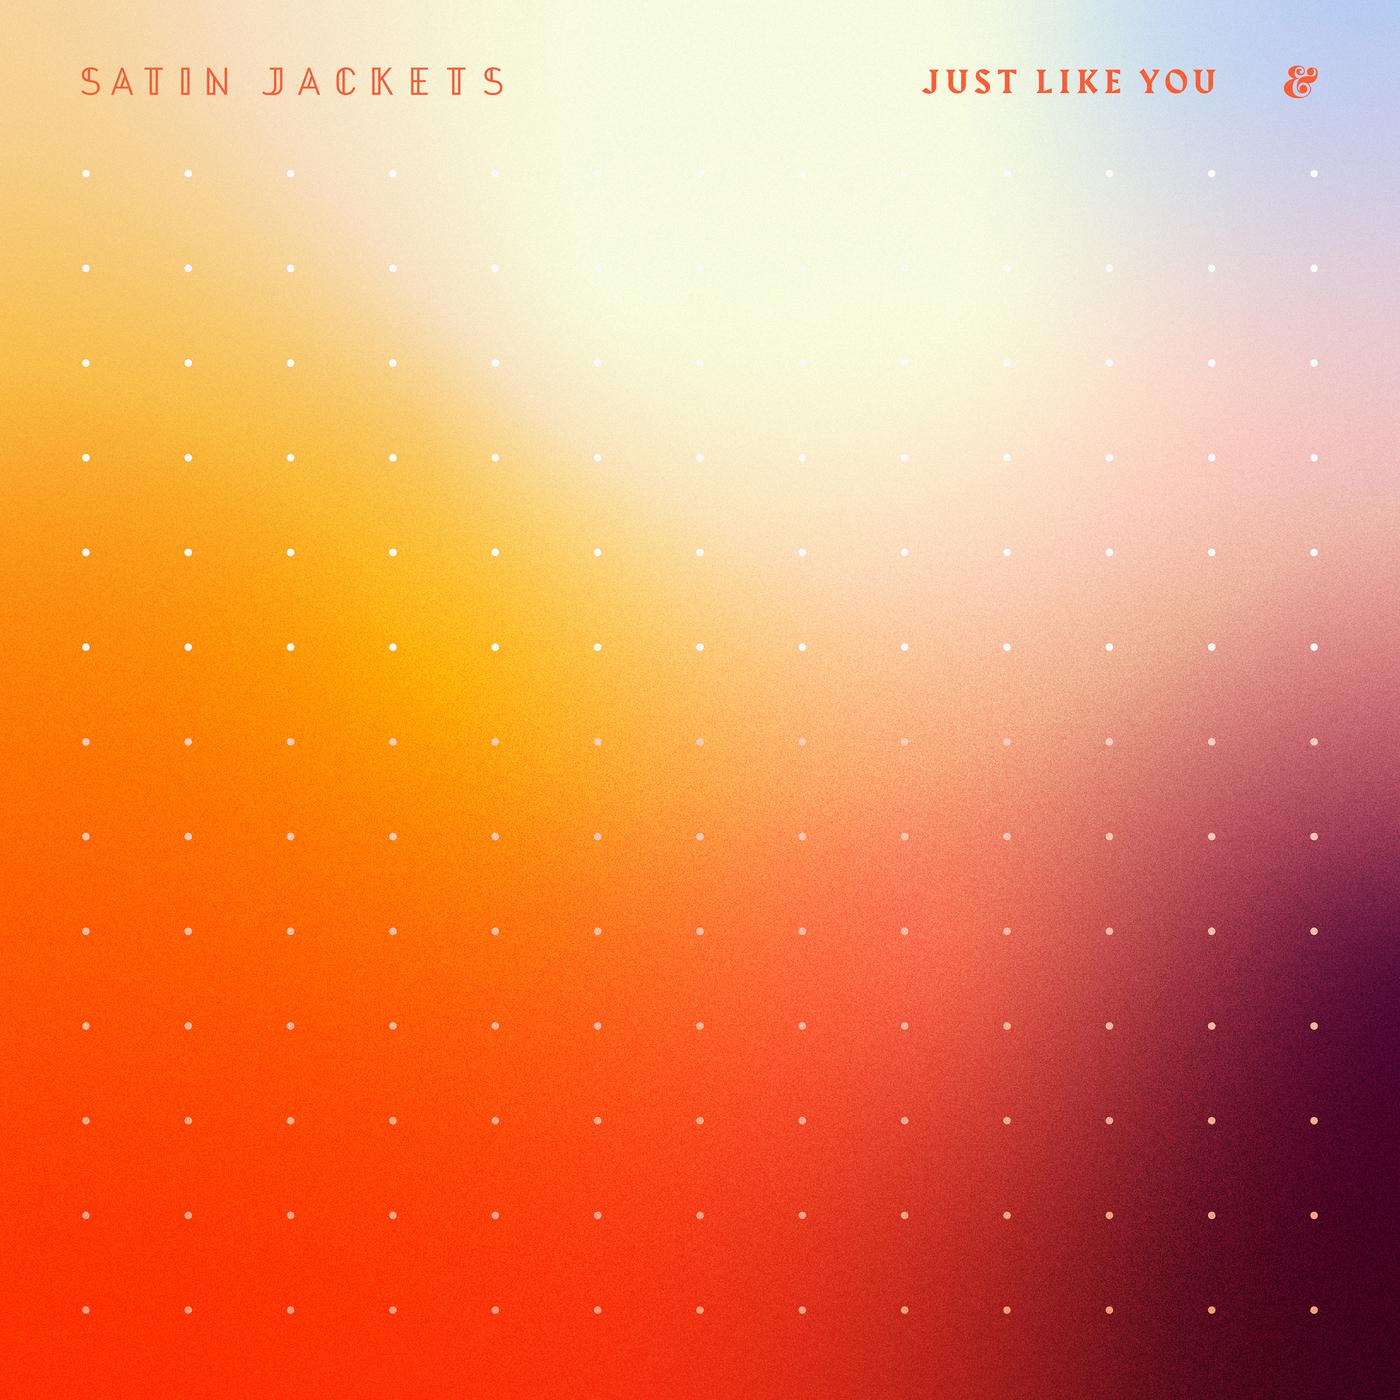 Just Like You歌词 歌手Satin Jackets-专辑Just Like You-单曲《Just Like You》LRC歌词下载